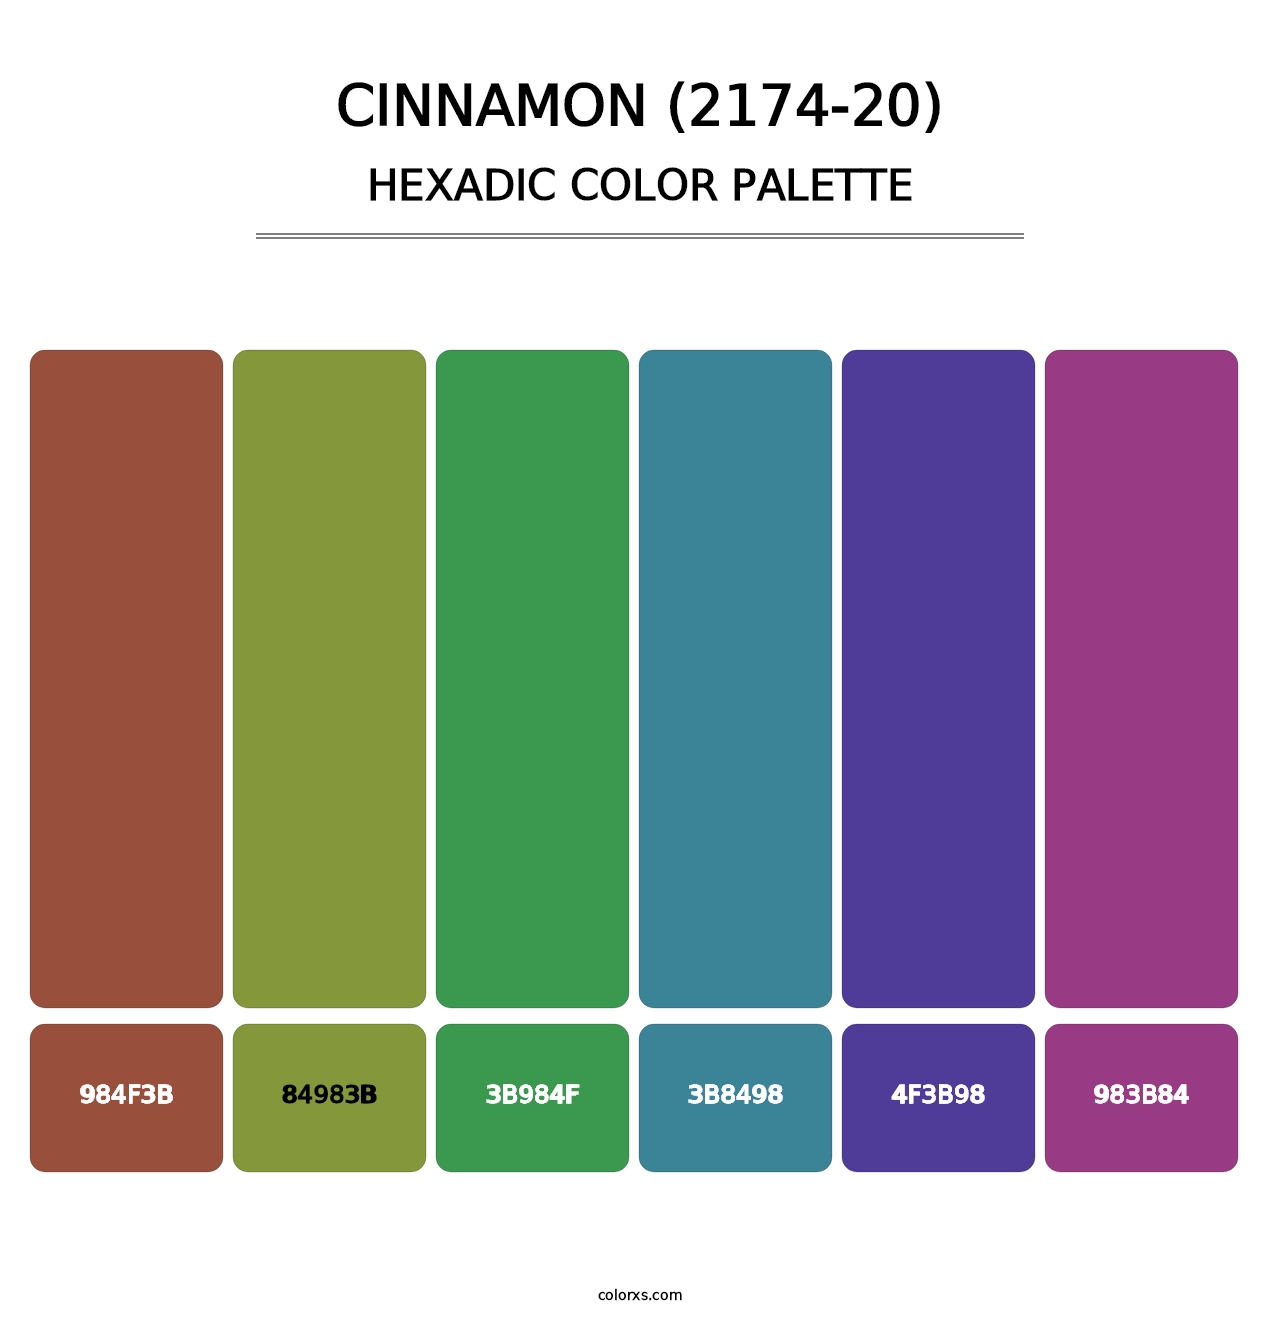 Cinnamon (2174-20) - Hexadic Color Palette